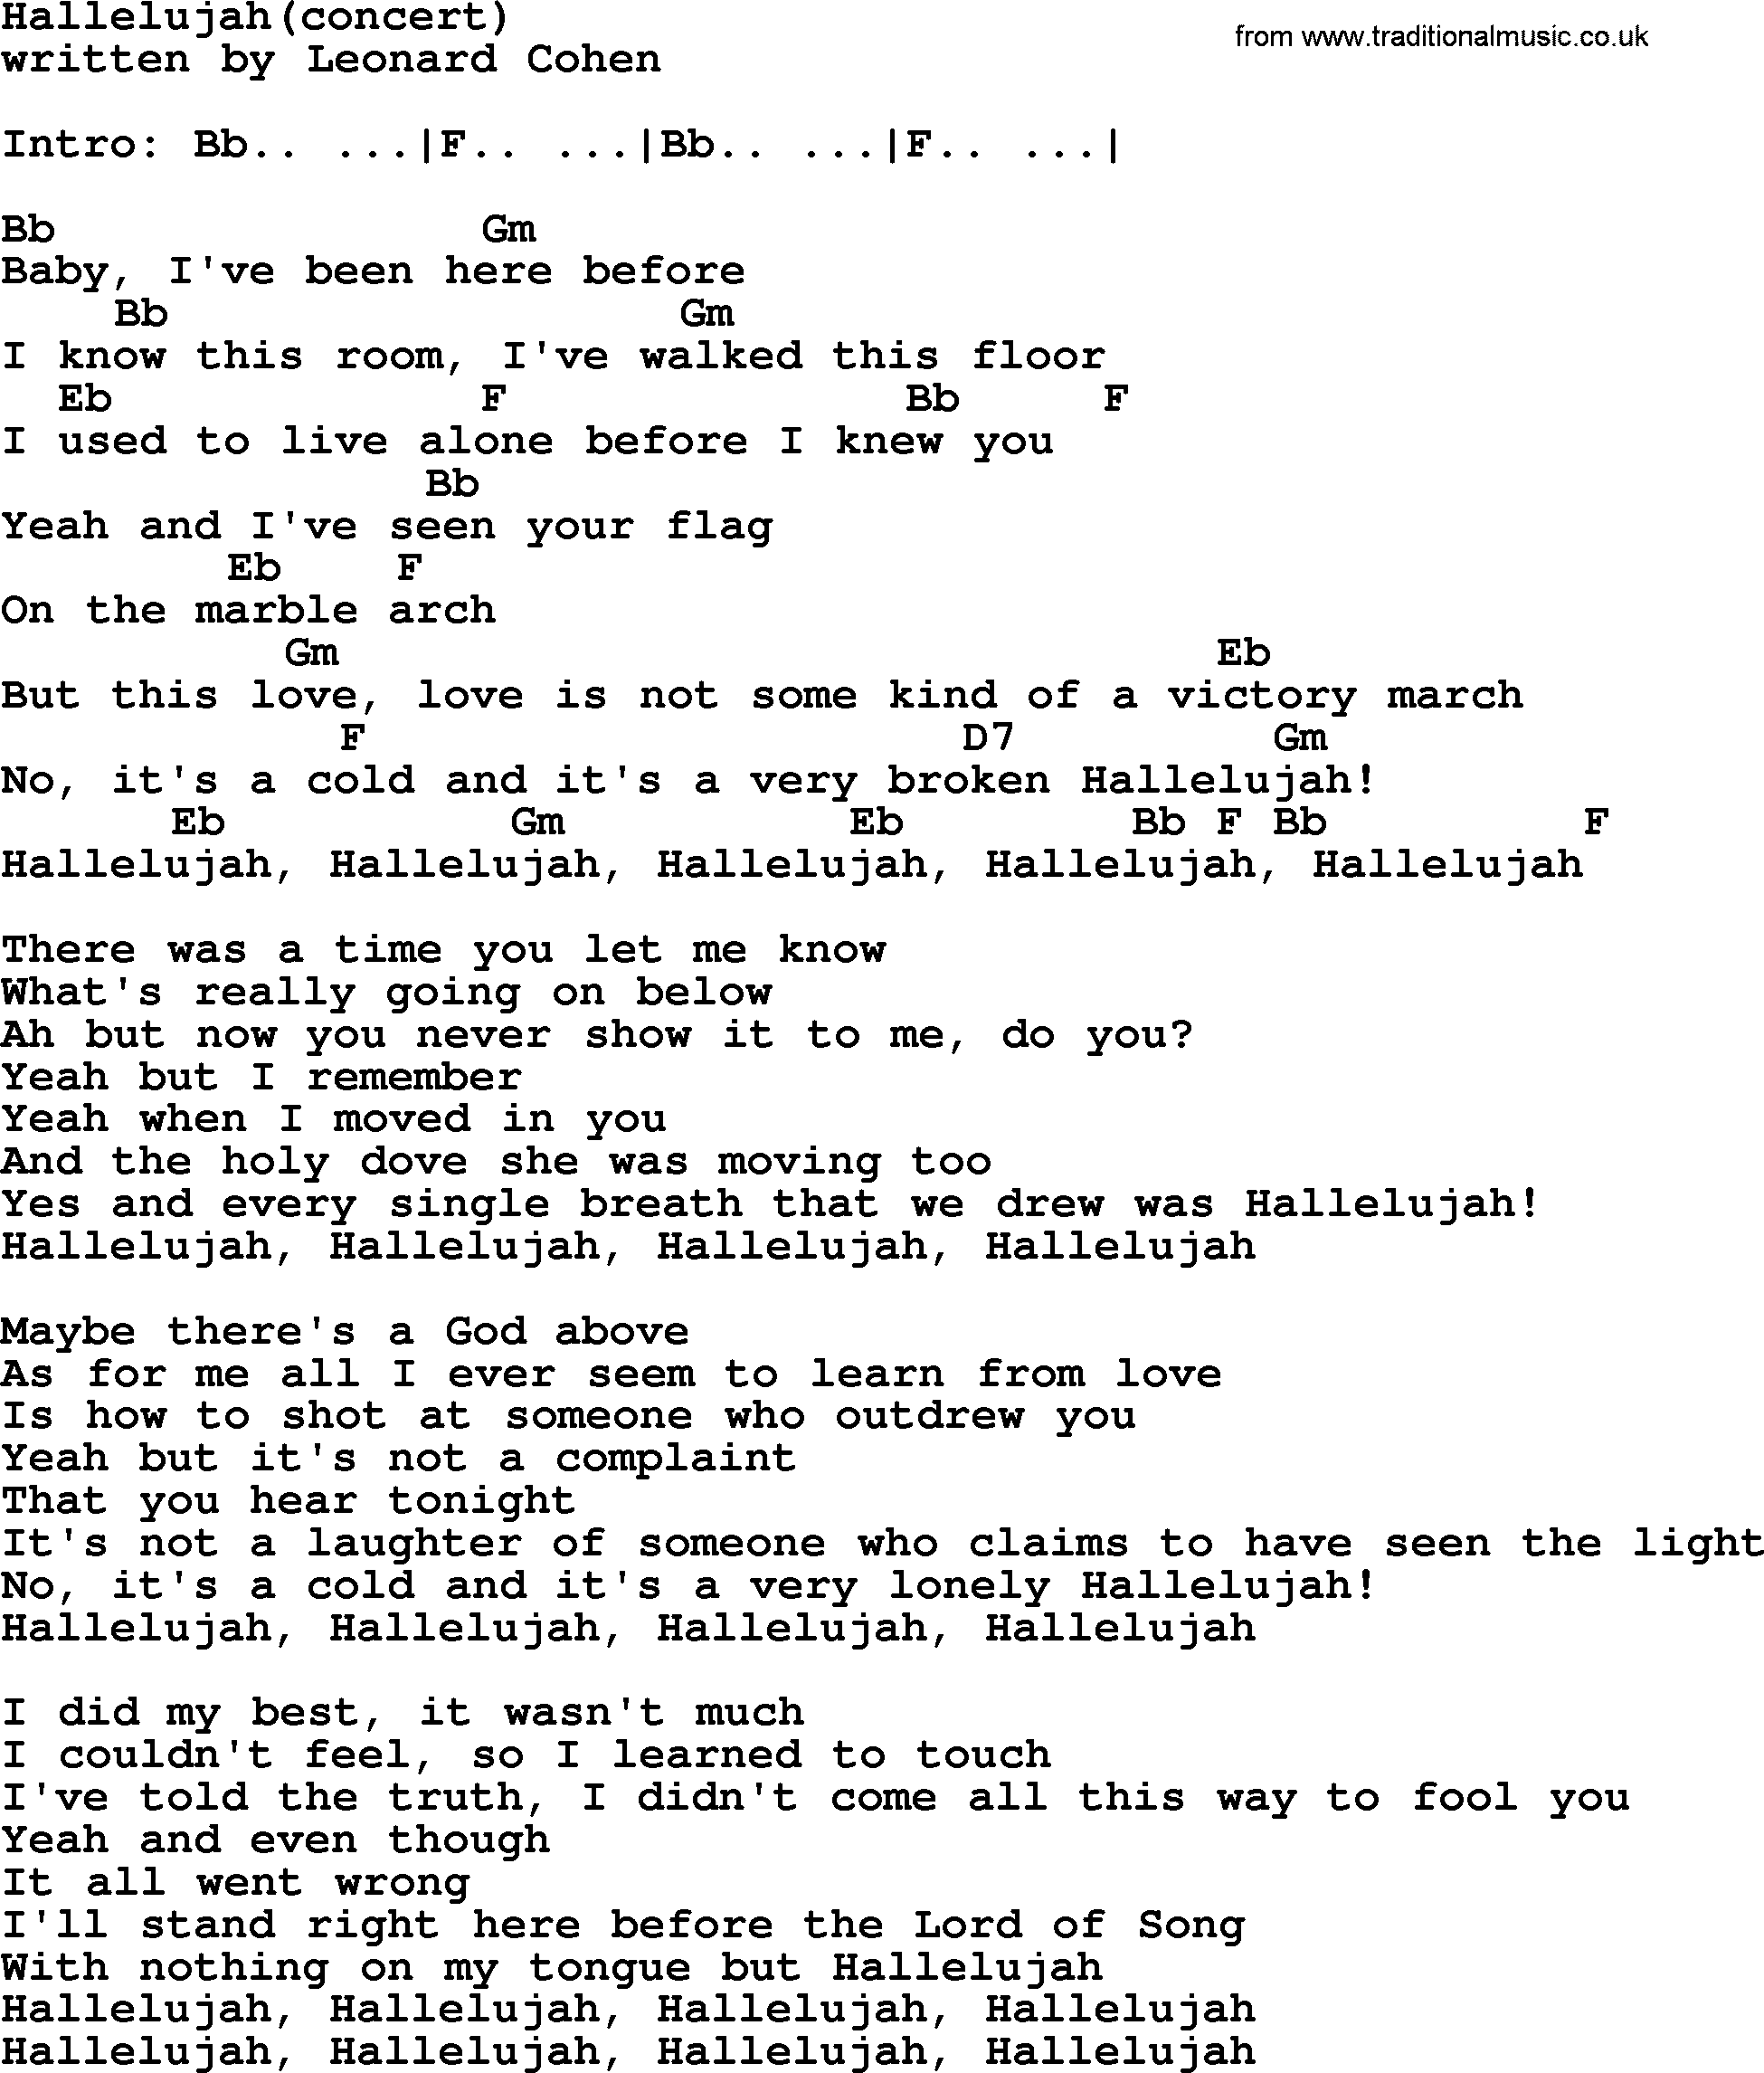 Leonard Cohen song Hallelujah(concert), lyrics and chords